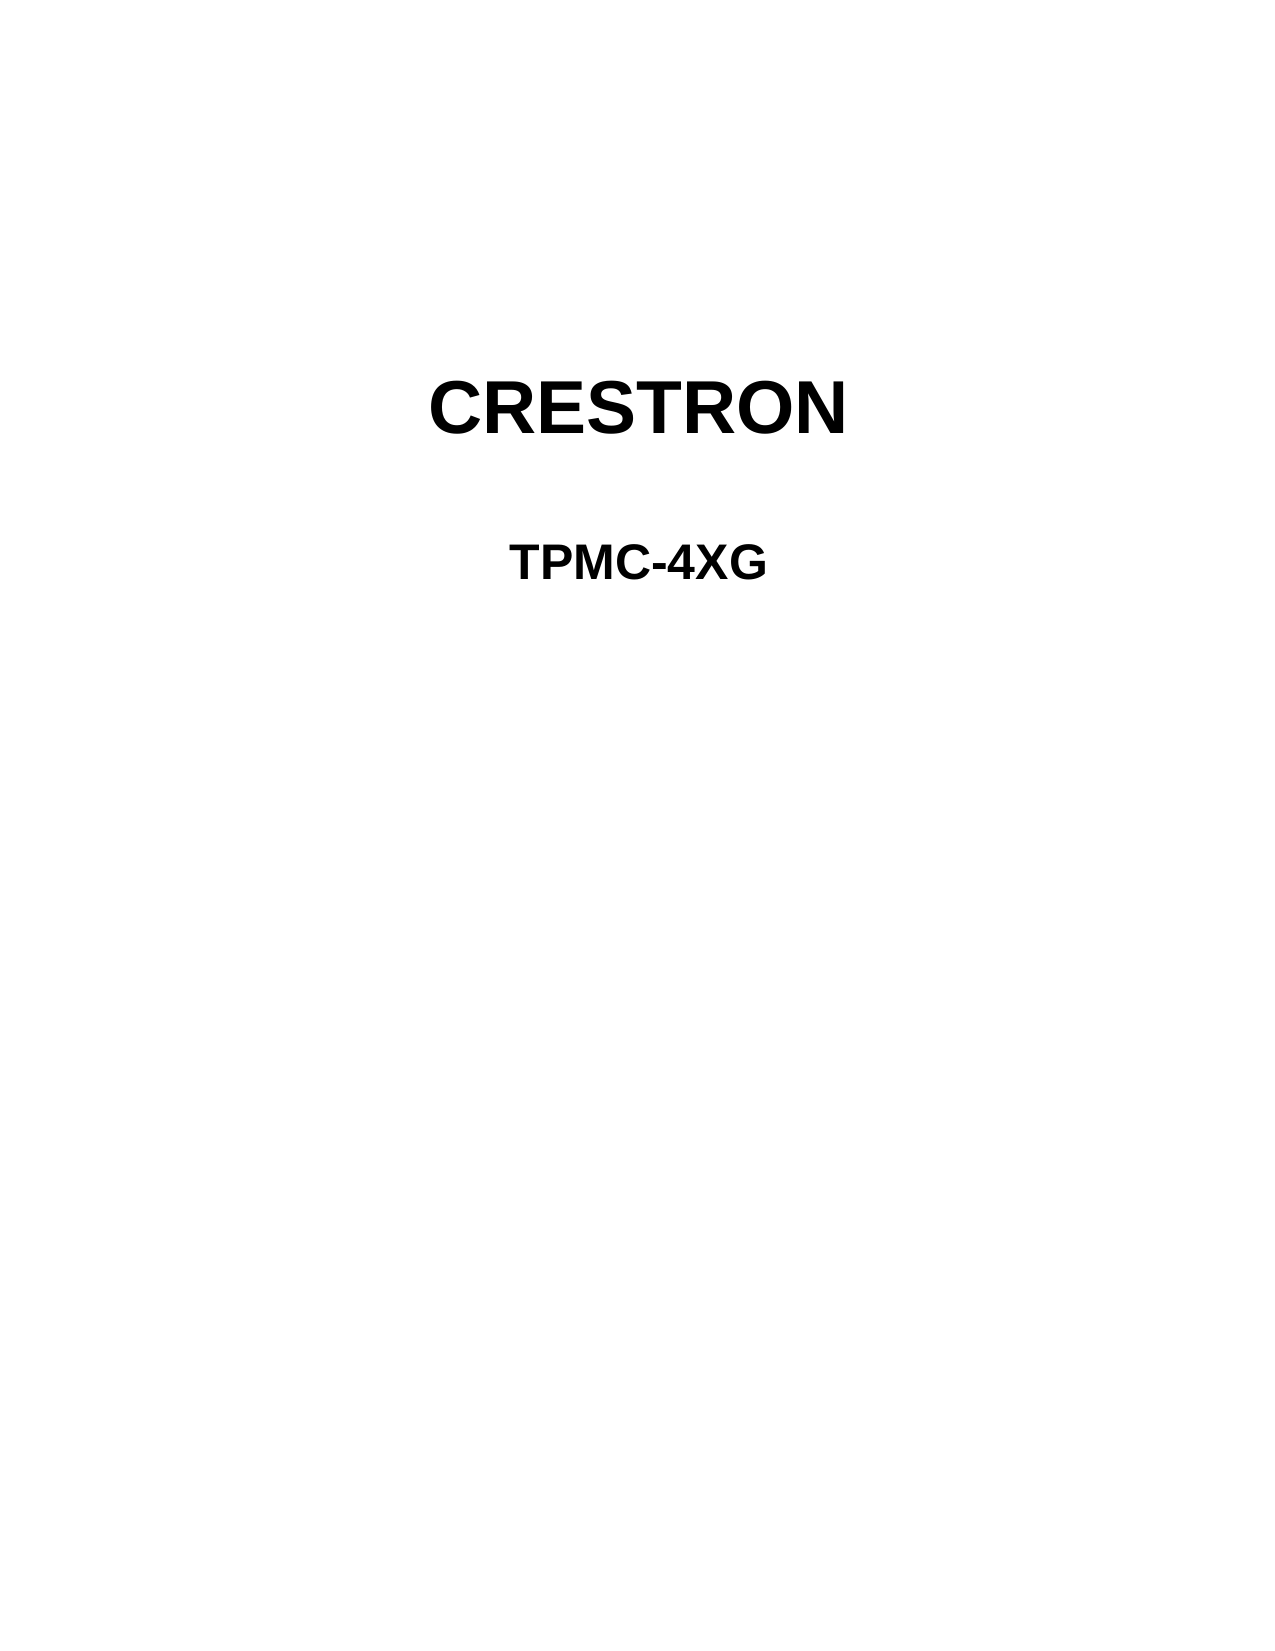 CRESTRONTPMC-4XG